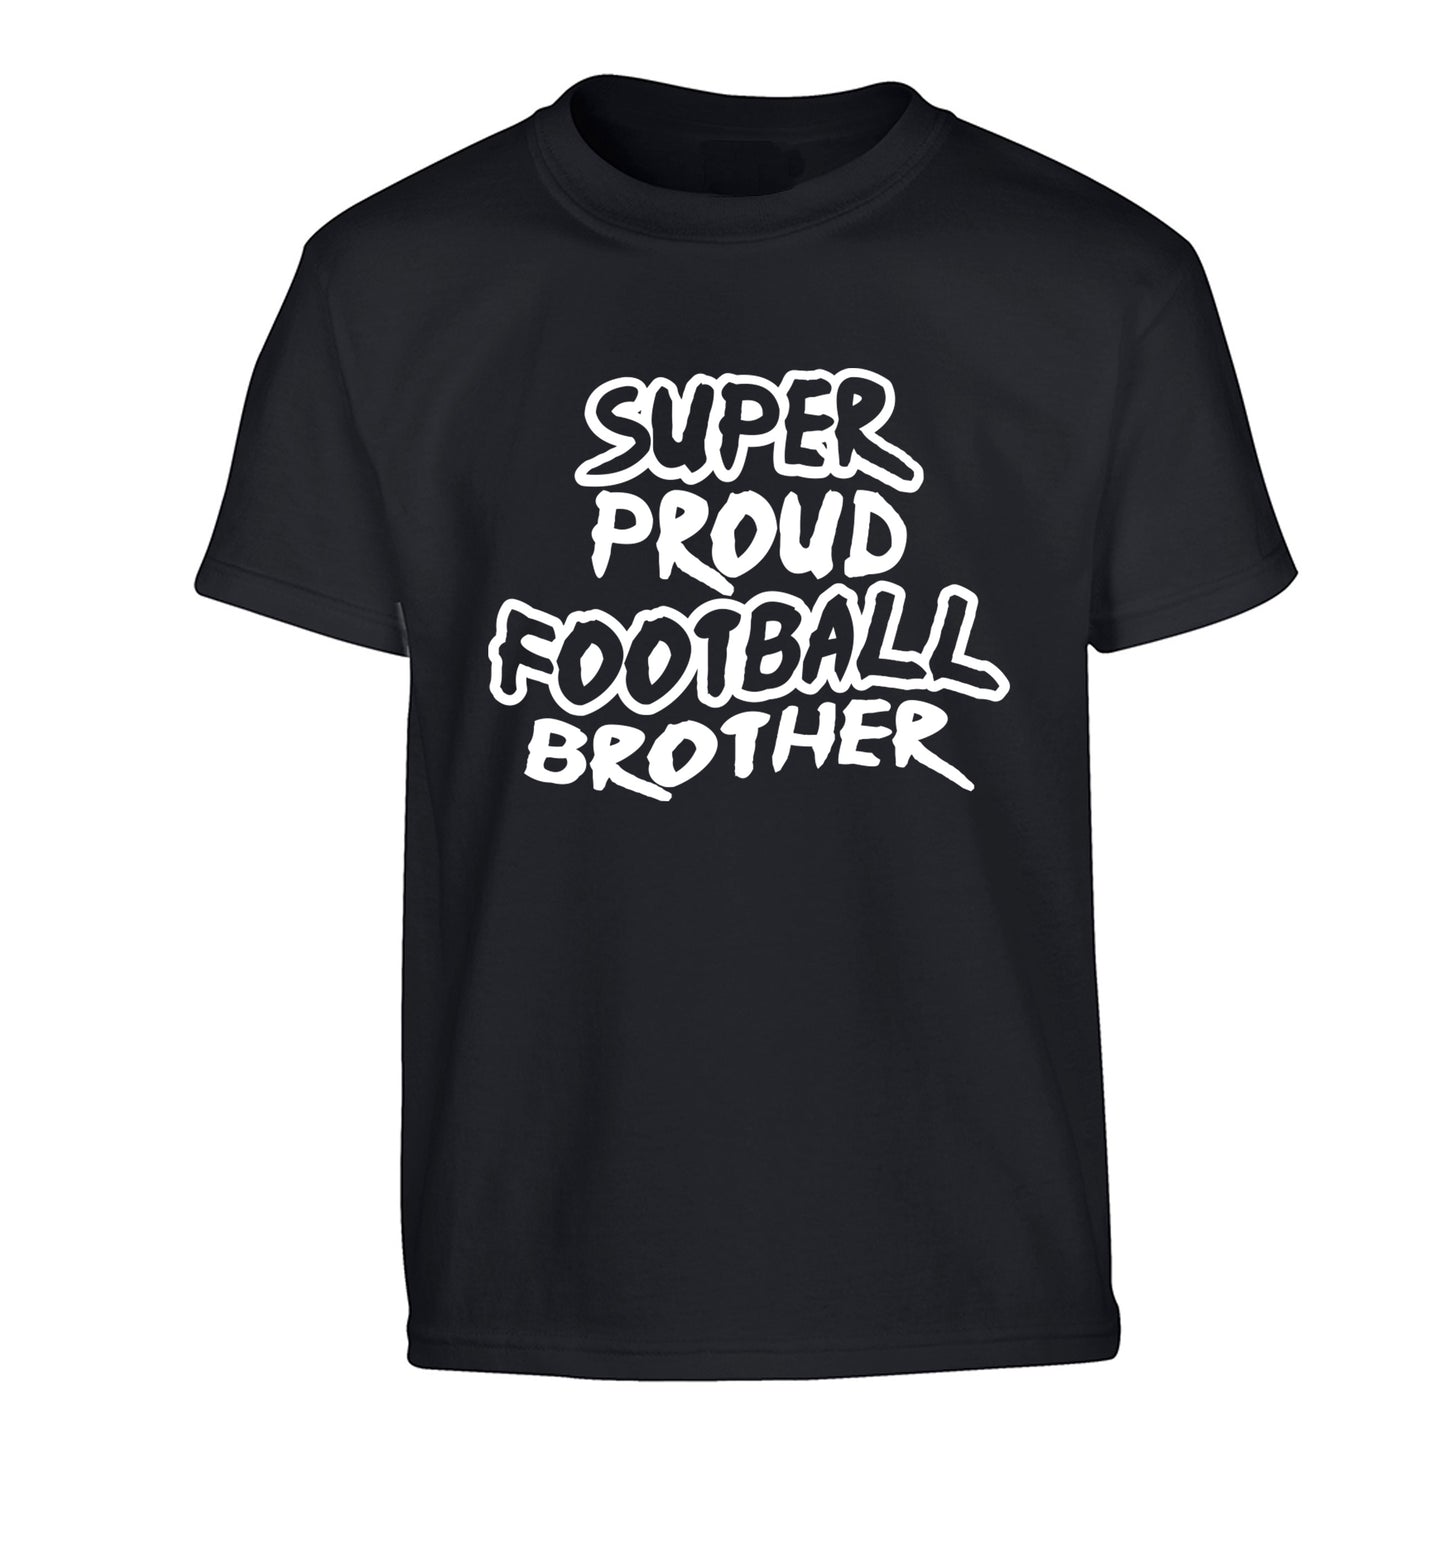 Super proud football brother Children's black Tshirt 12-14 Years